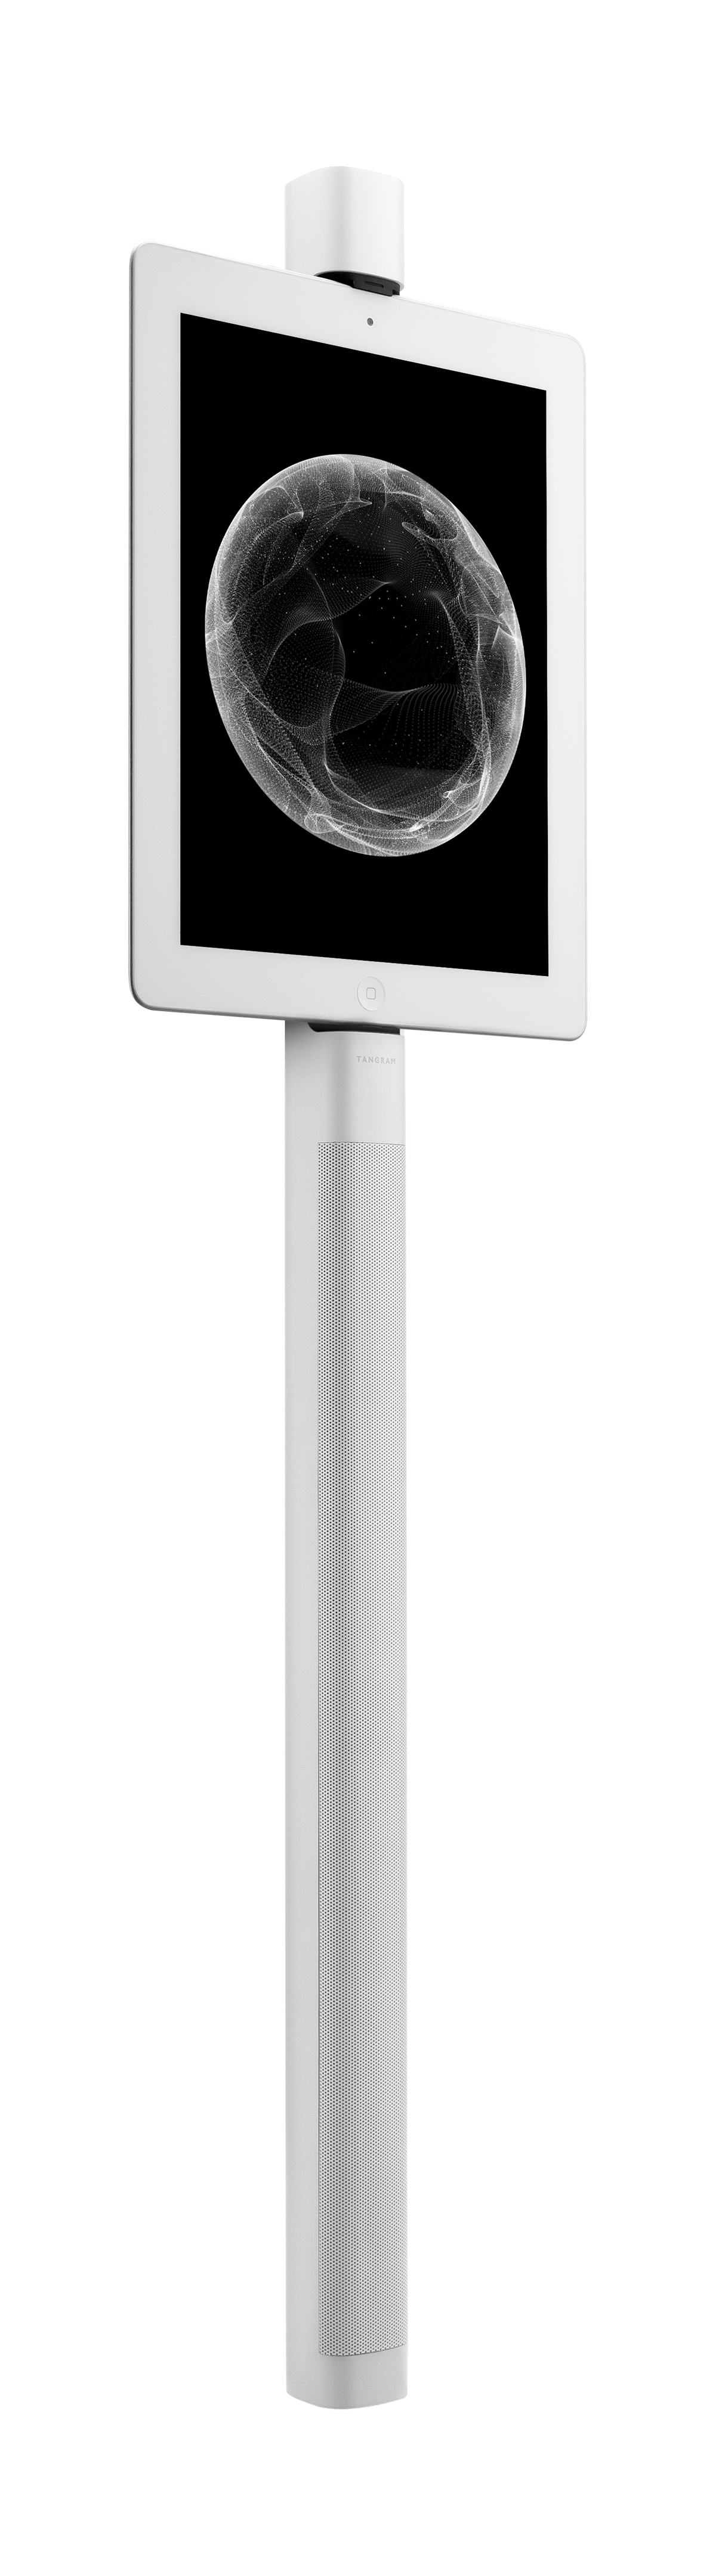 smart mount speaker mount tangram iPad apple